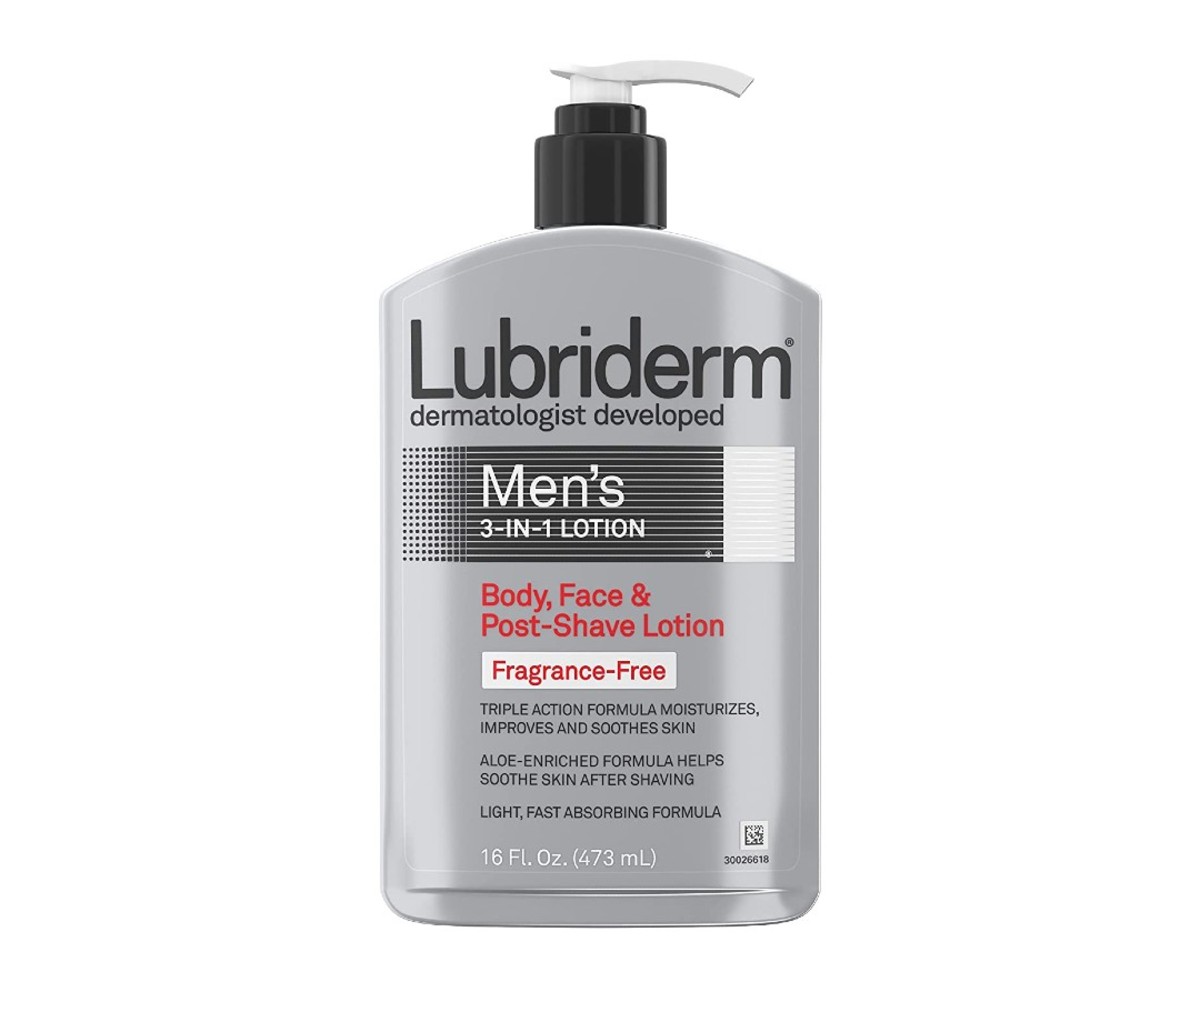 Lubriderm Men’s 3-in-1 Lotion